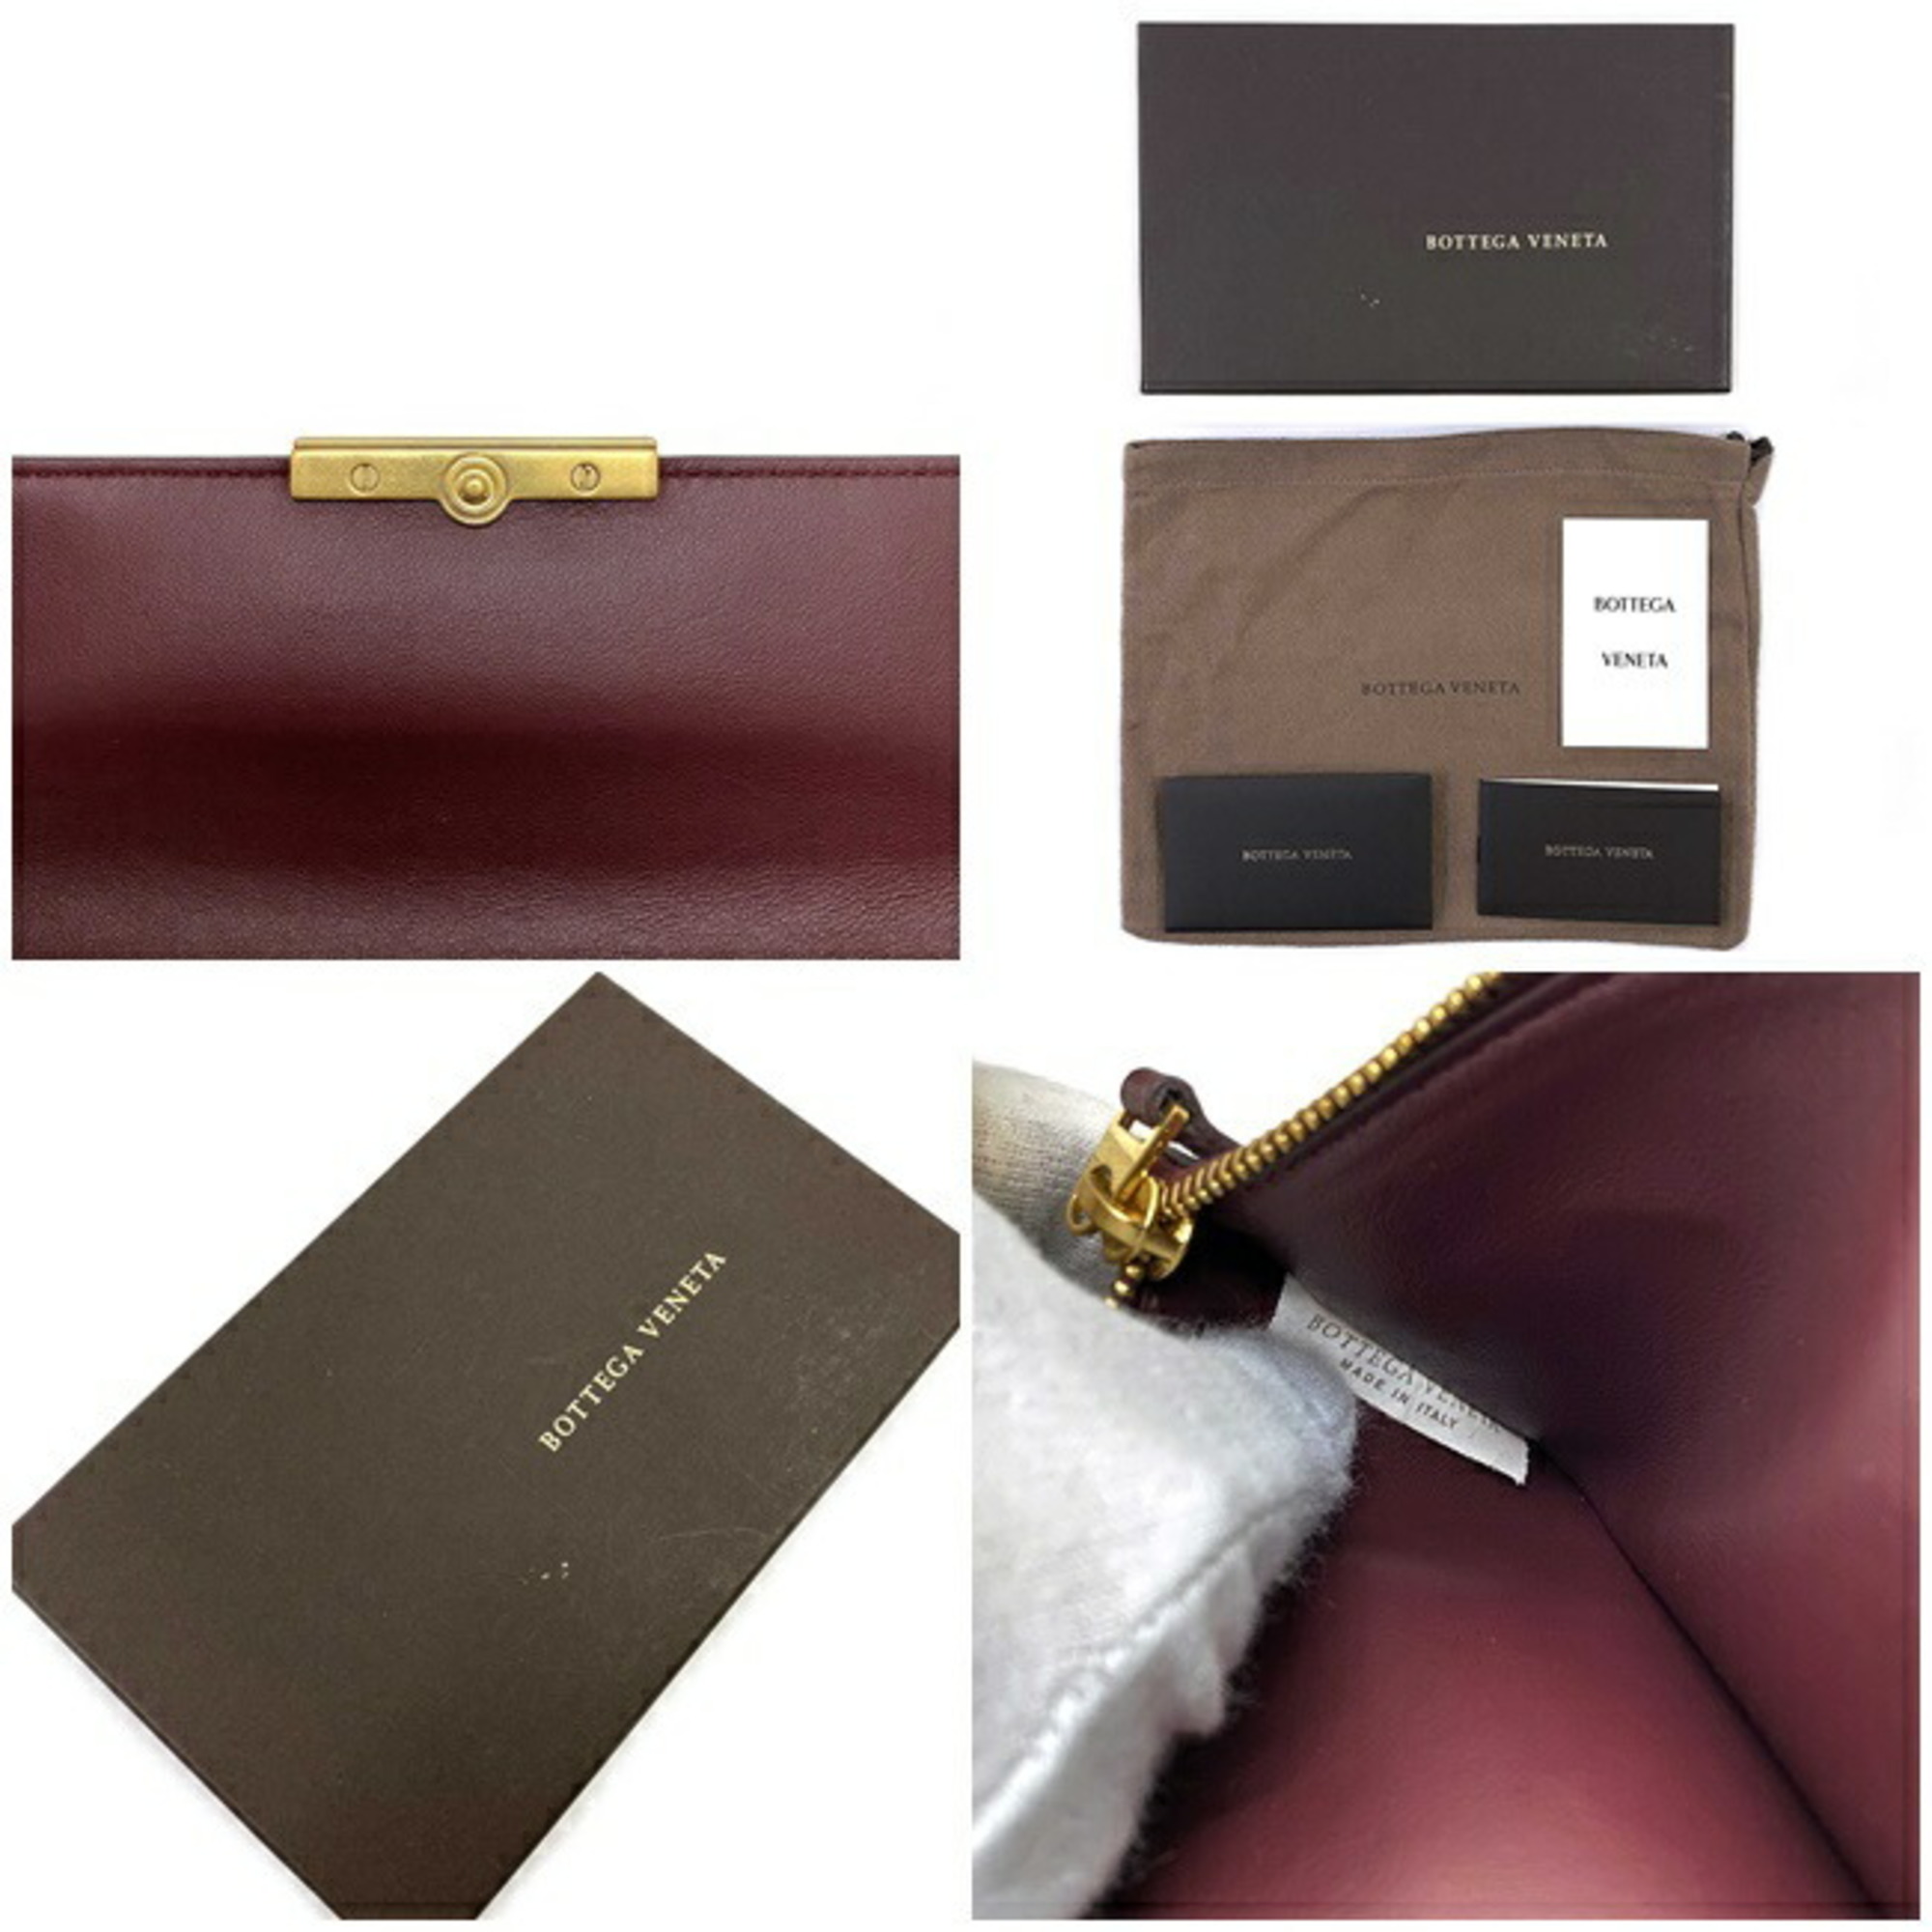 Bottega Veneta Trifold Long Wallet Bordeaux Gold 578751 VMAU1 6206 Leather Calfskin BOTTEGA VENETA Flap Women's